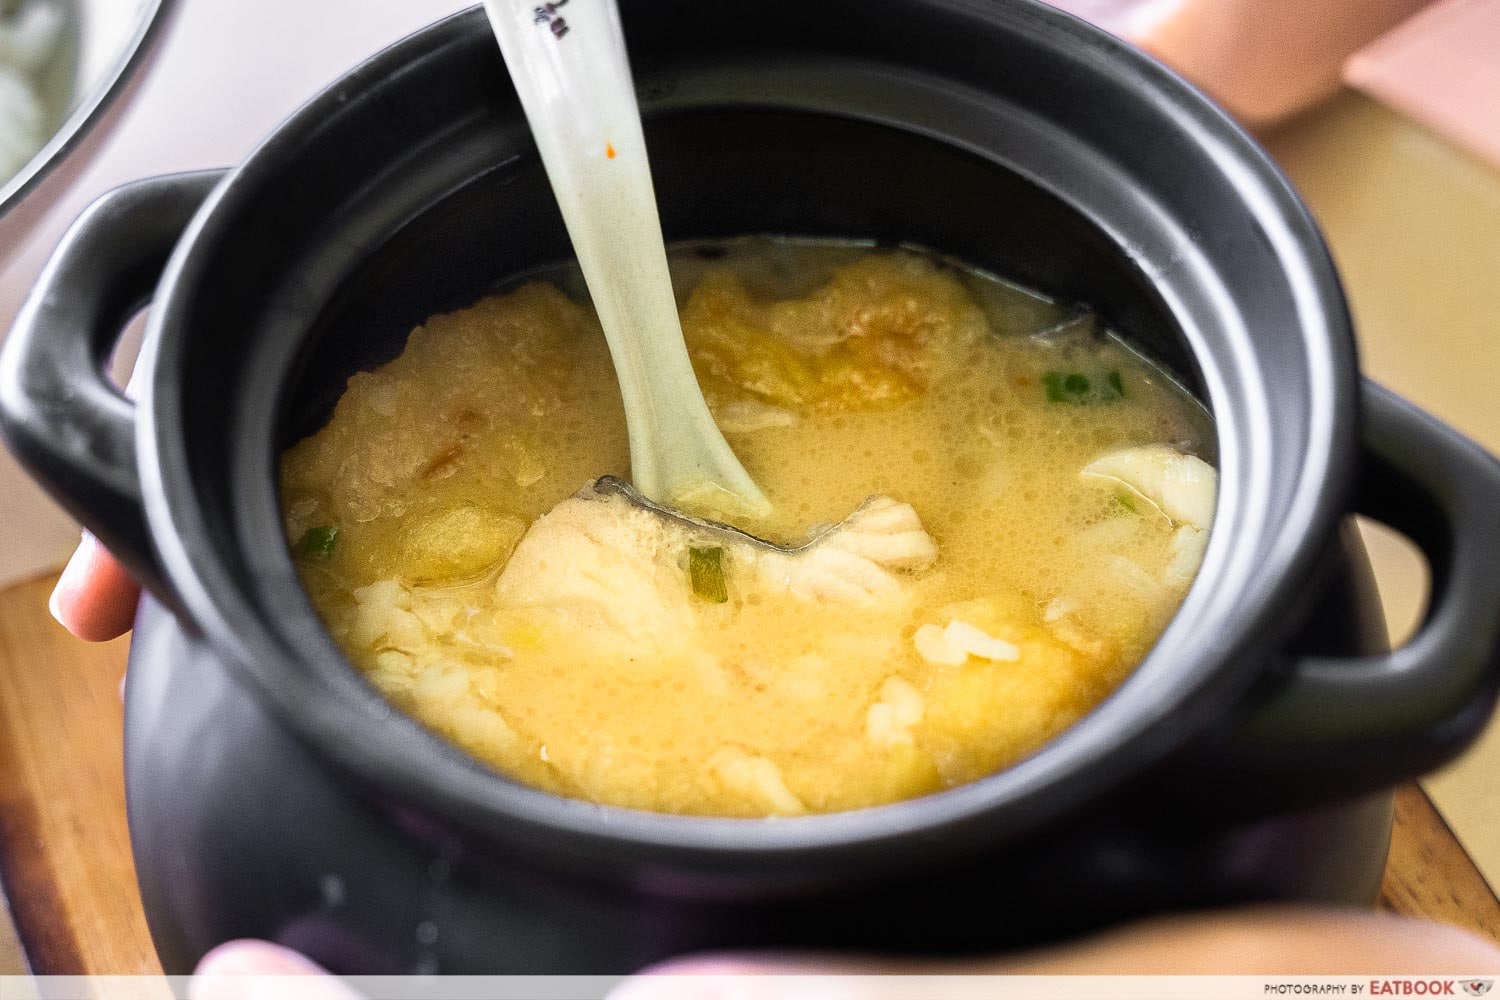 teochew fish soup - pumpkin fish soup